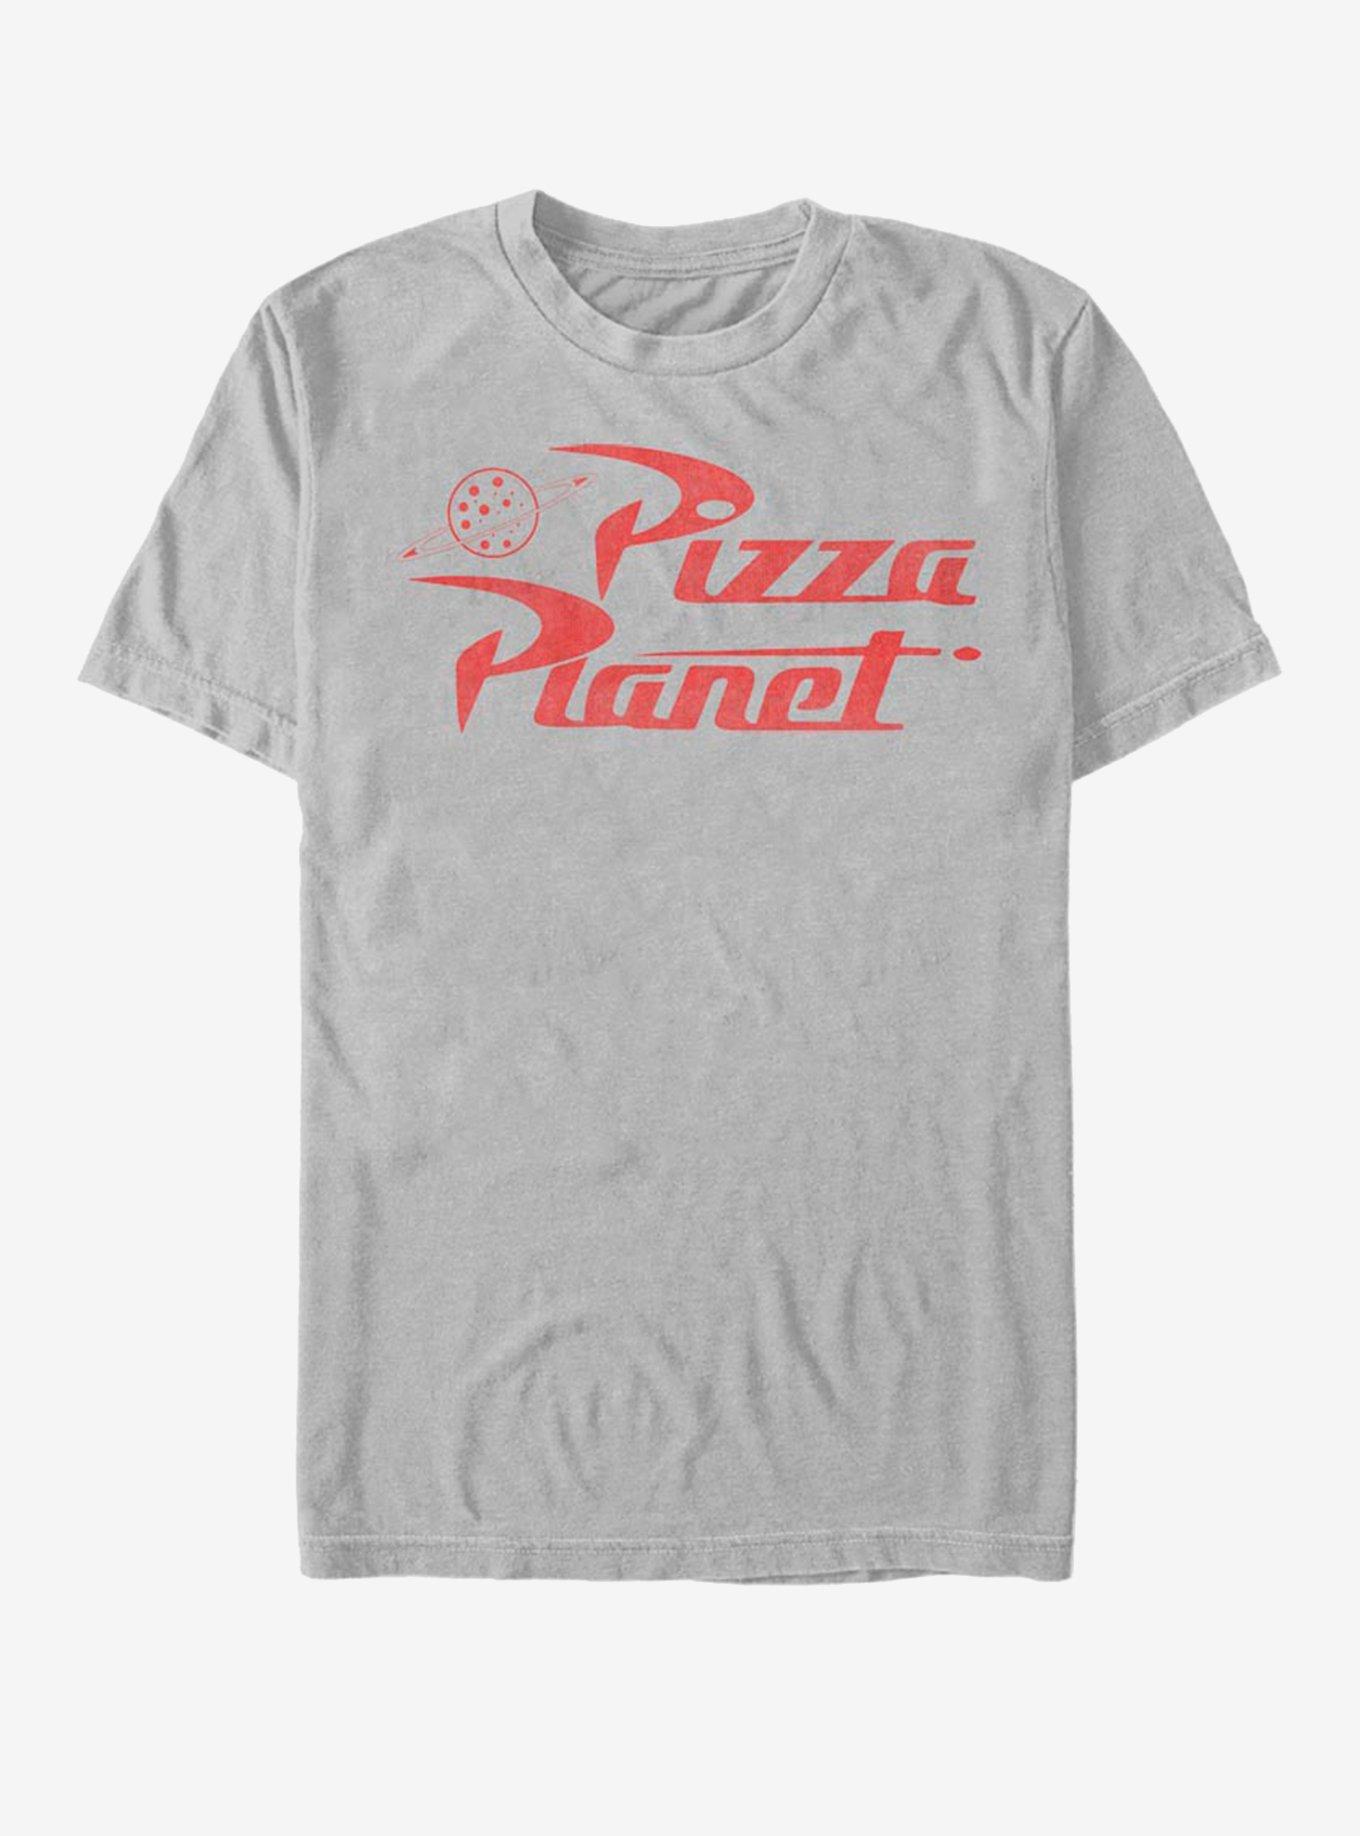 Disney Pixar Toy Story Pizza Planet T-Shirt, SILVER, hi-res